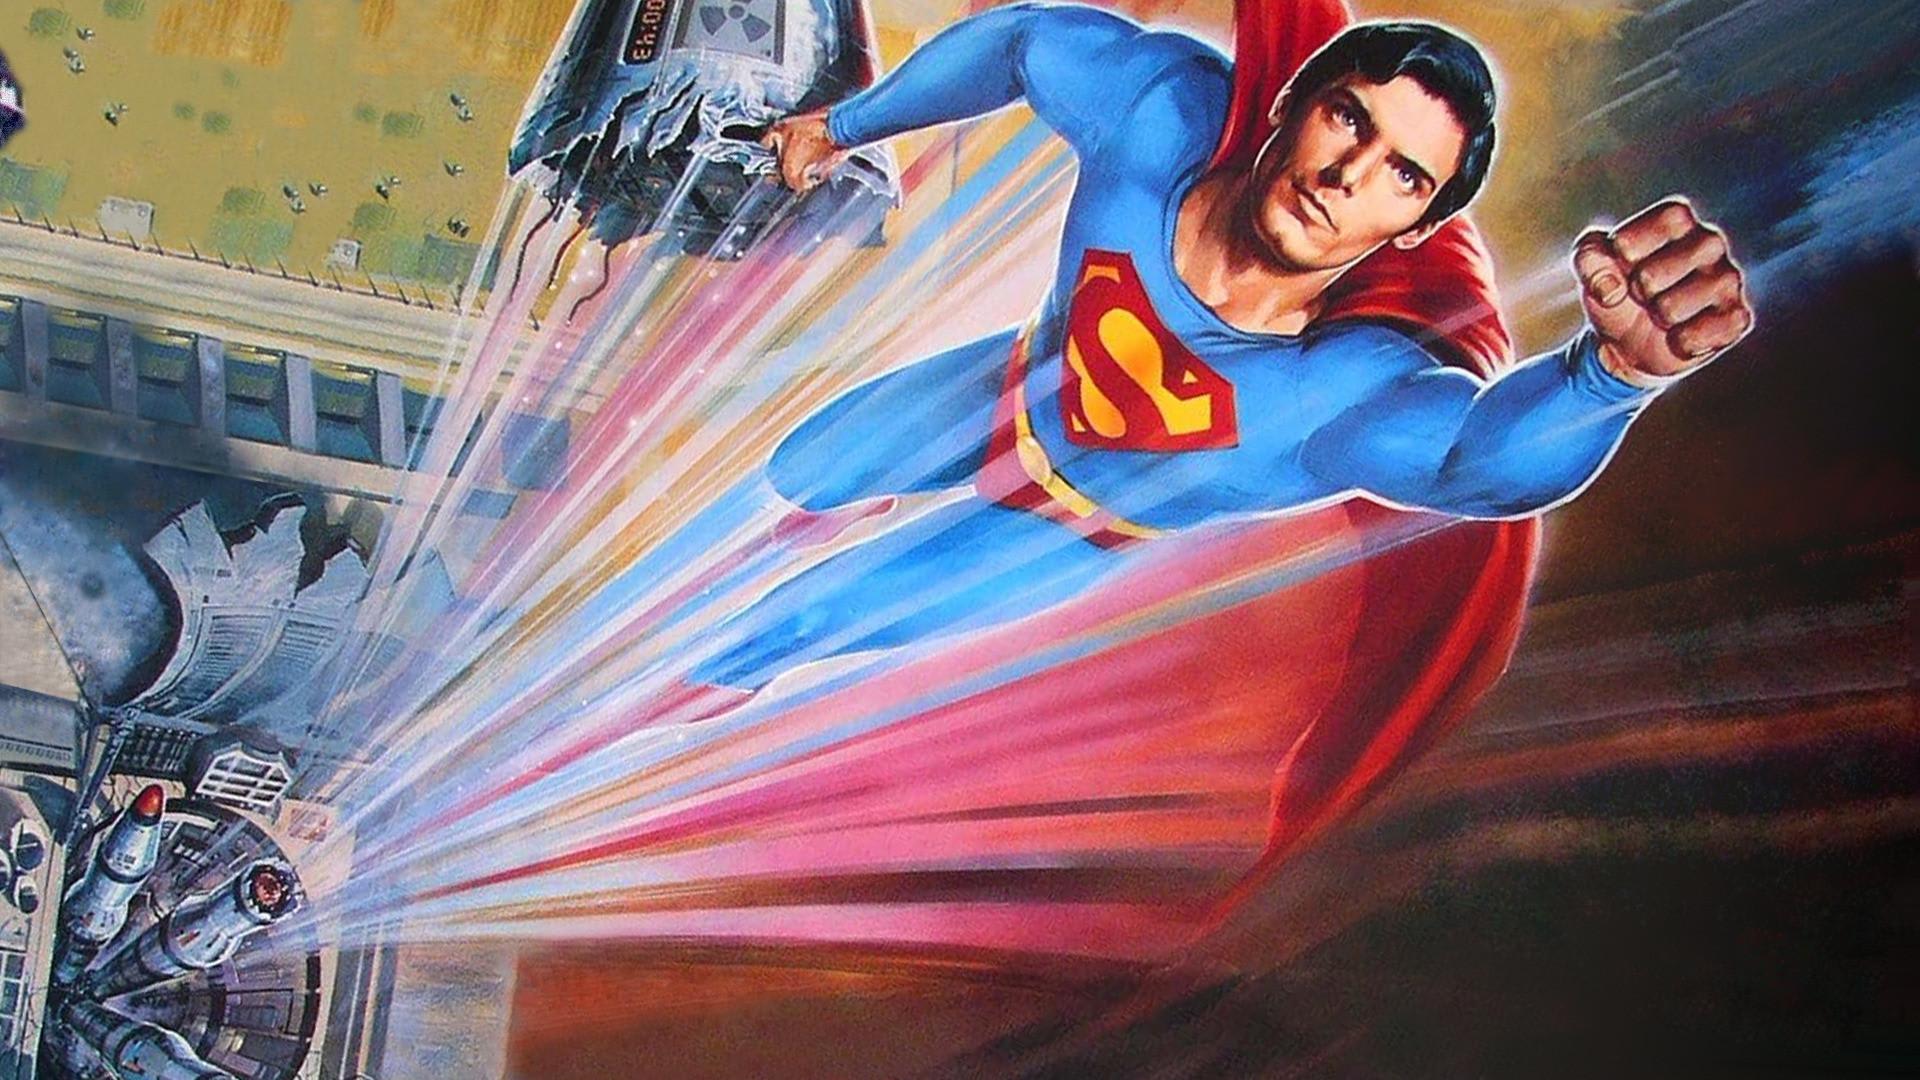 Superman 4